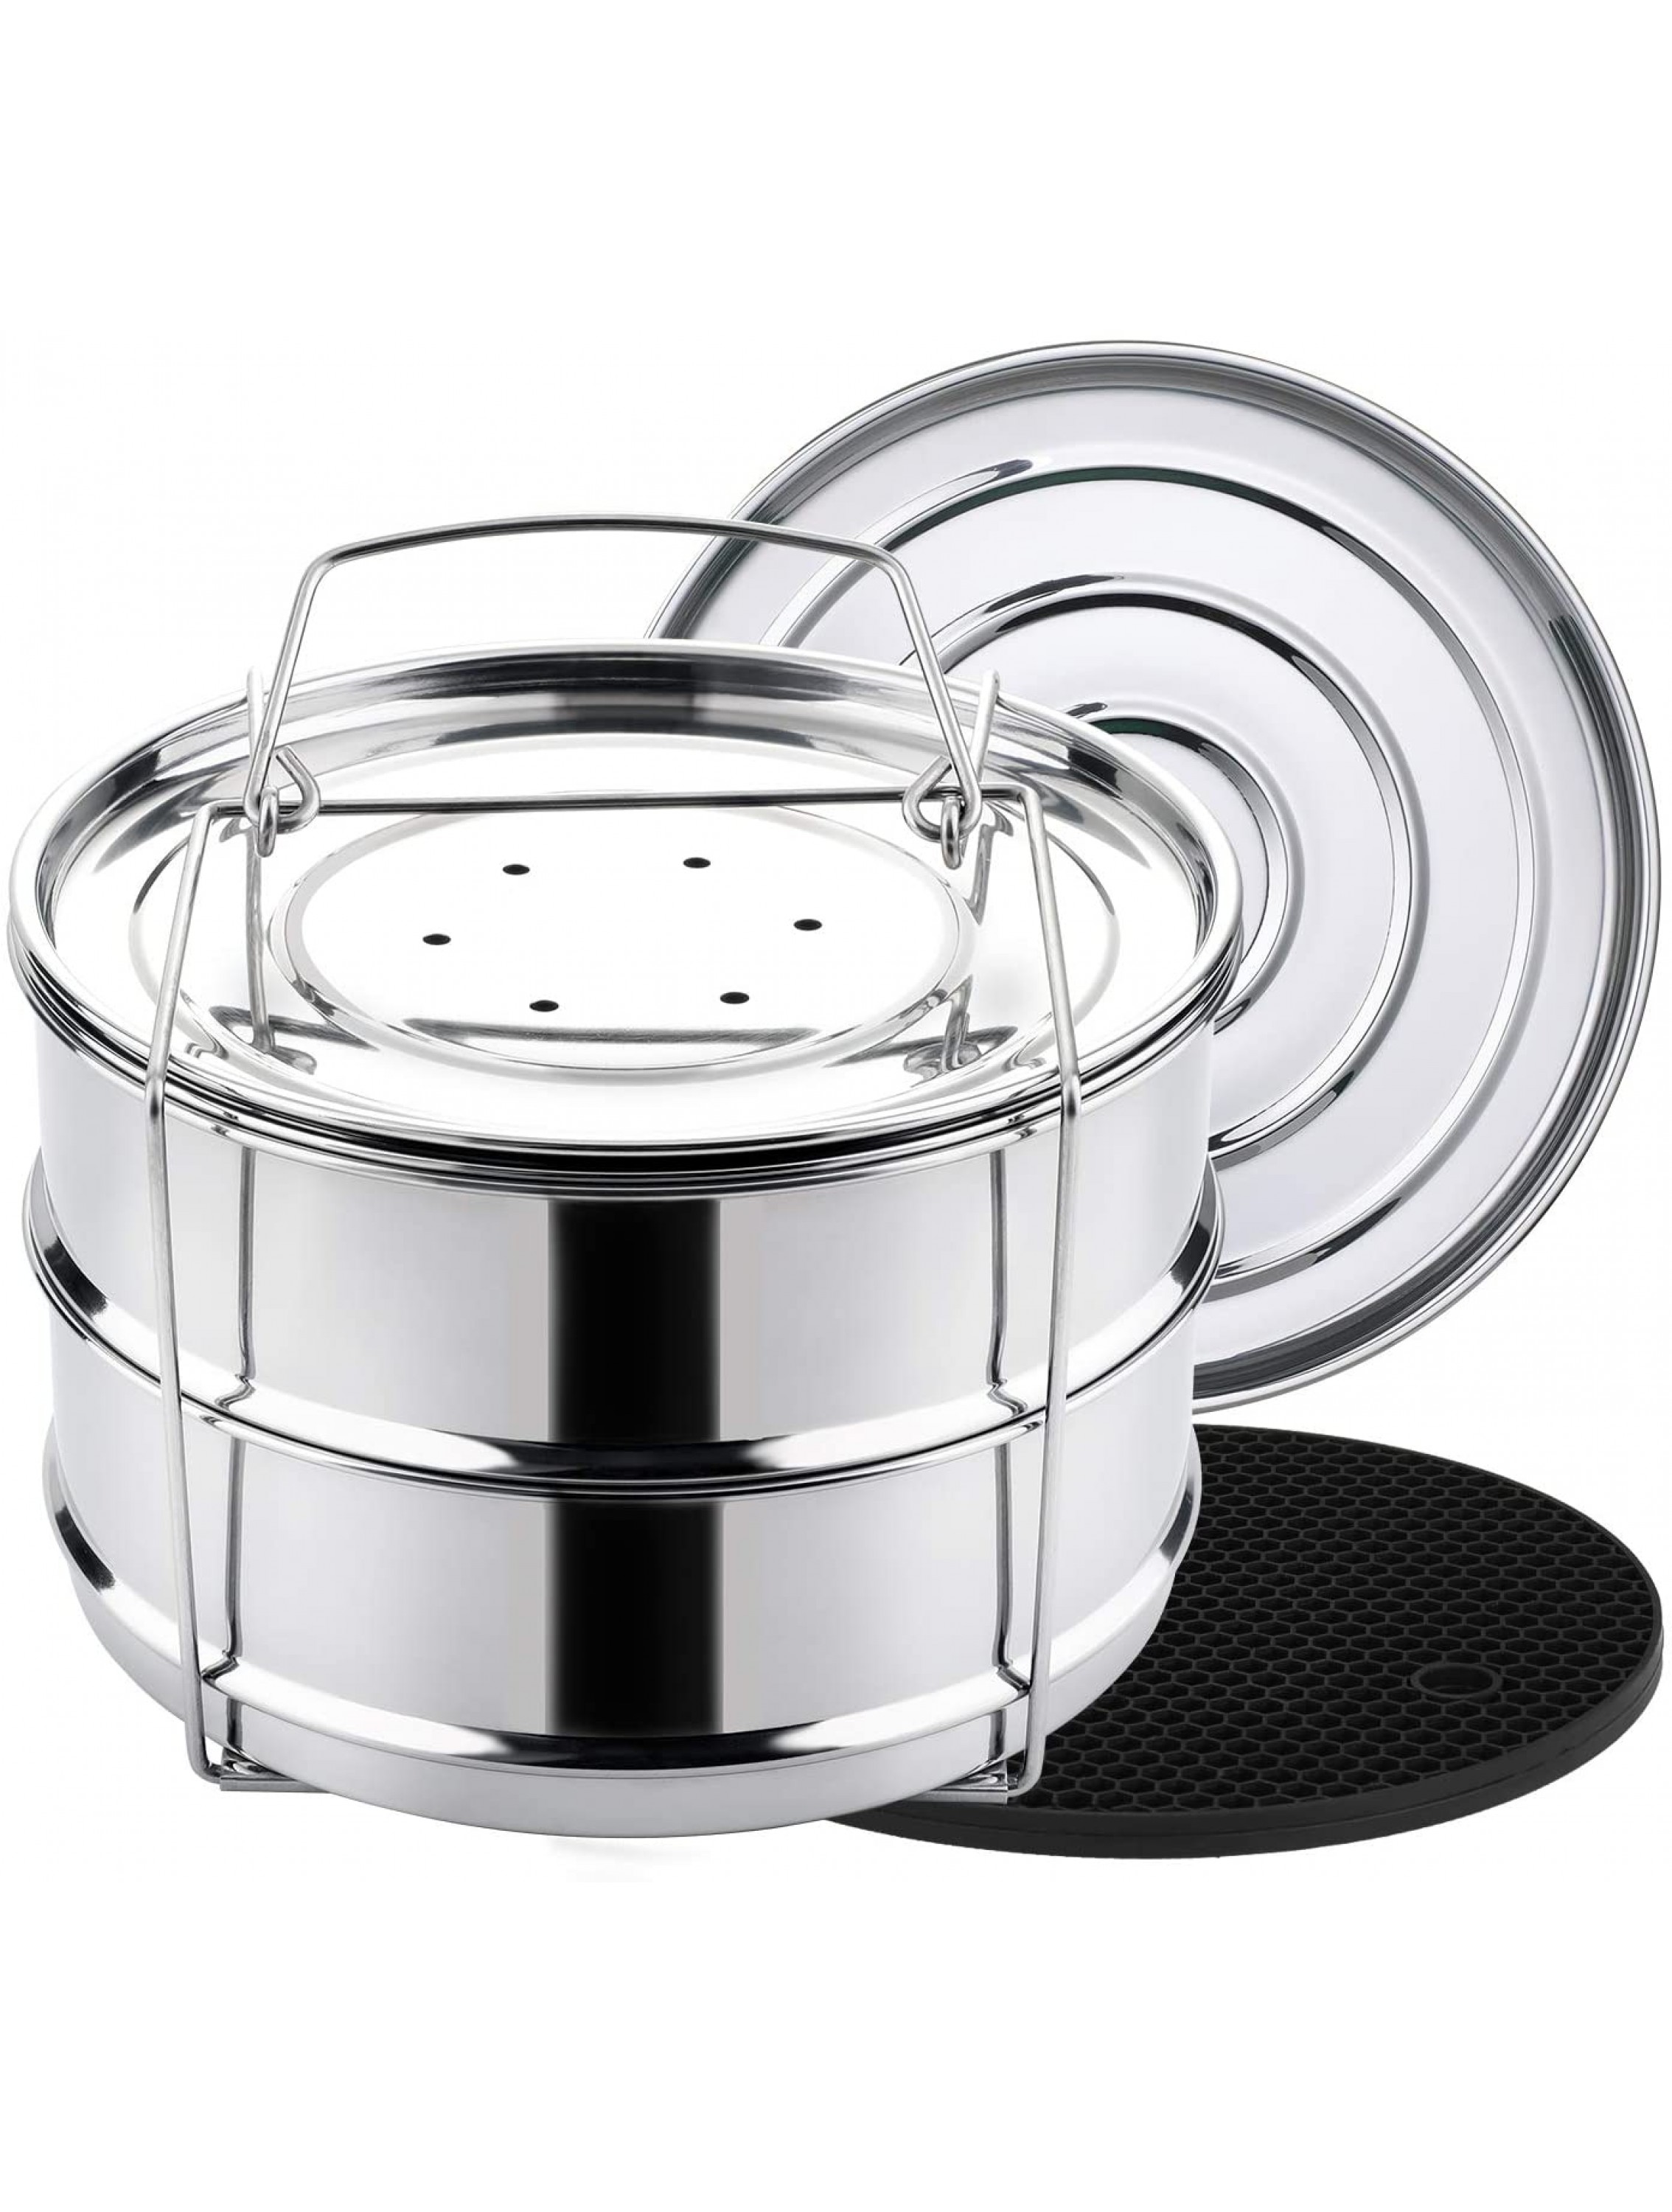 Aozita 3 Quart Stackable Steamer Insert Pans Accessories for Instant Pot Mini 3 qt Pot in Pot Baking Casseroles Lasagna Pans Food Steamer for Pressure Cooker Upgrade Interchangeable Lids - BYDRJA0ZZ